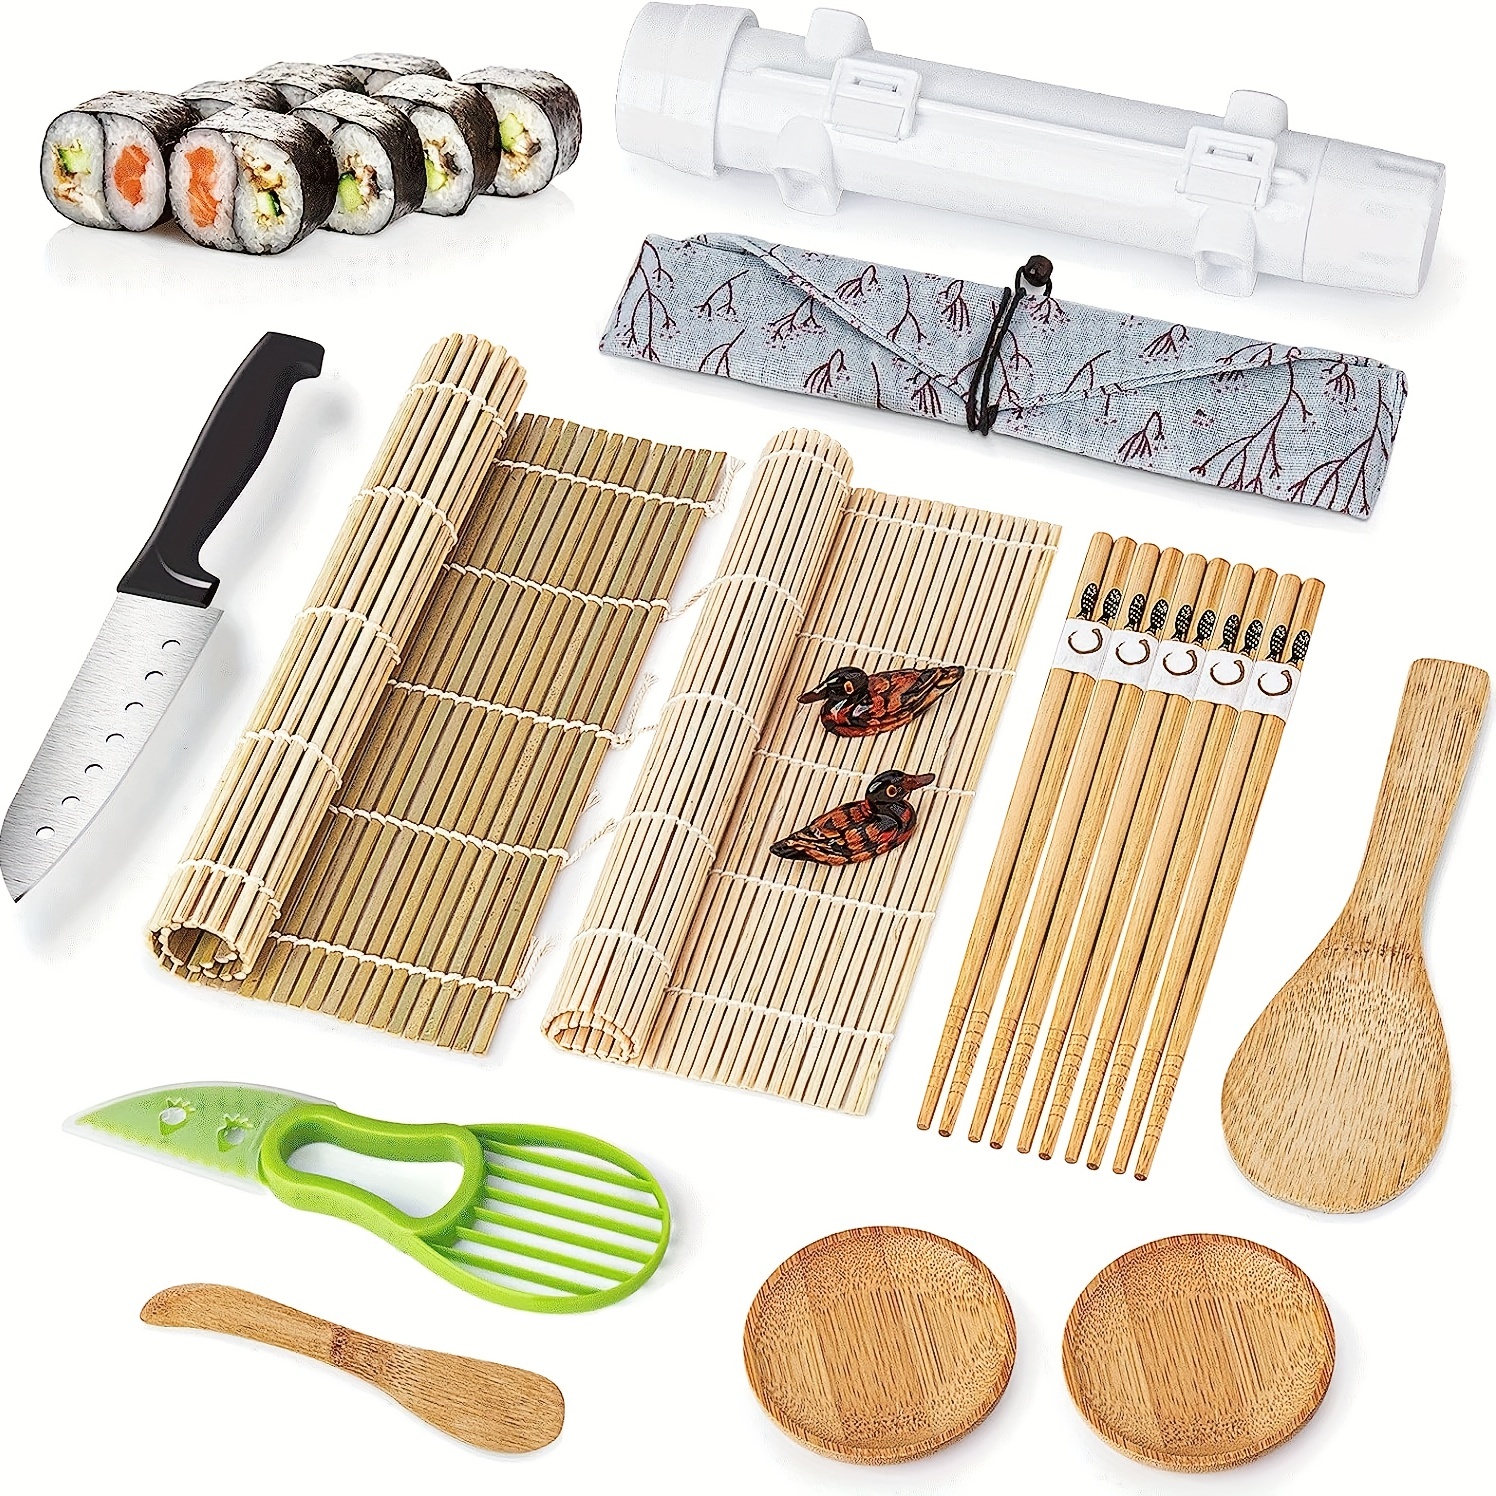 13-in-1 Sushi Making Kit, Sushi Bazooker Maker Set, Sushi Tools